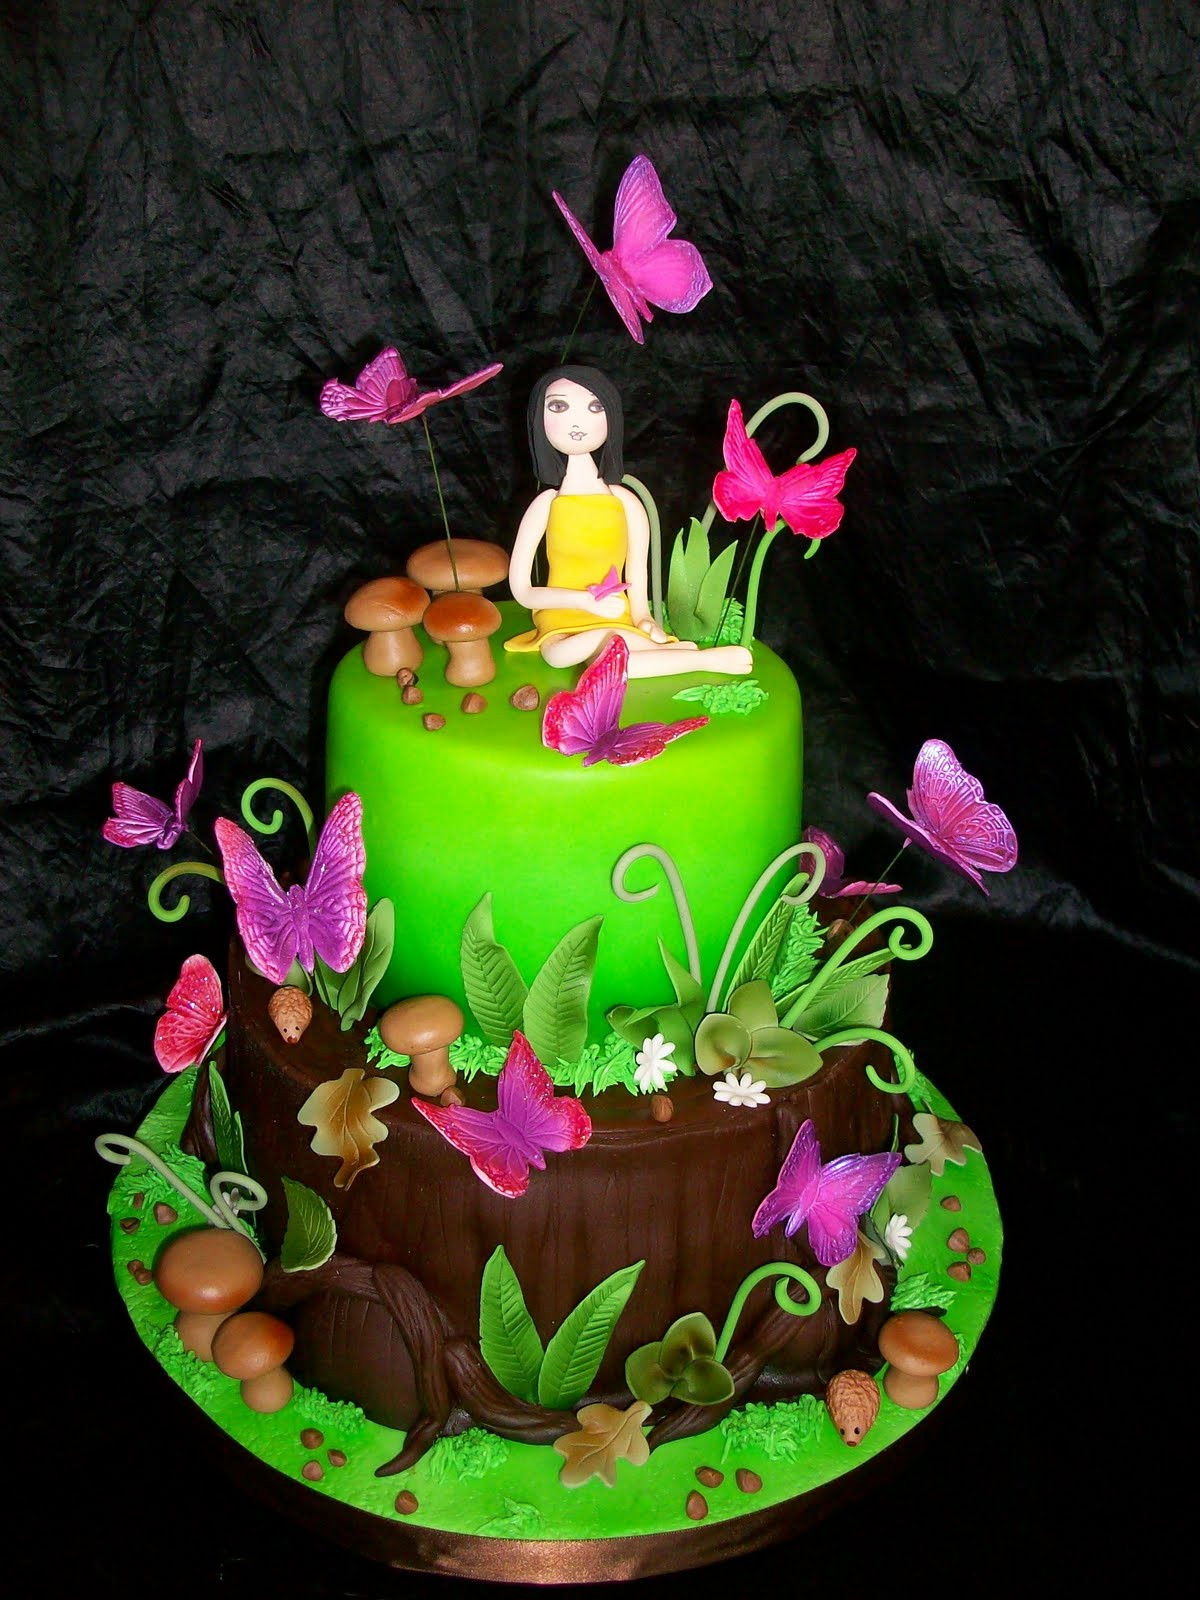 Butterfly Birthday Cakes
 Lauren s Butterfly Garden Birthday Cake